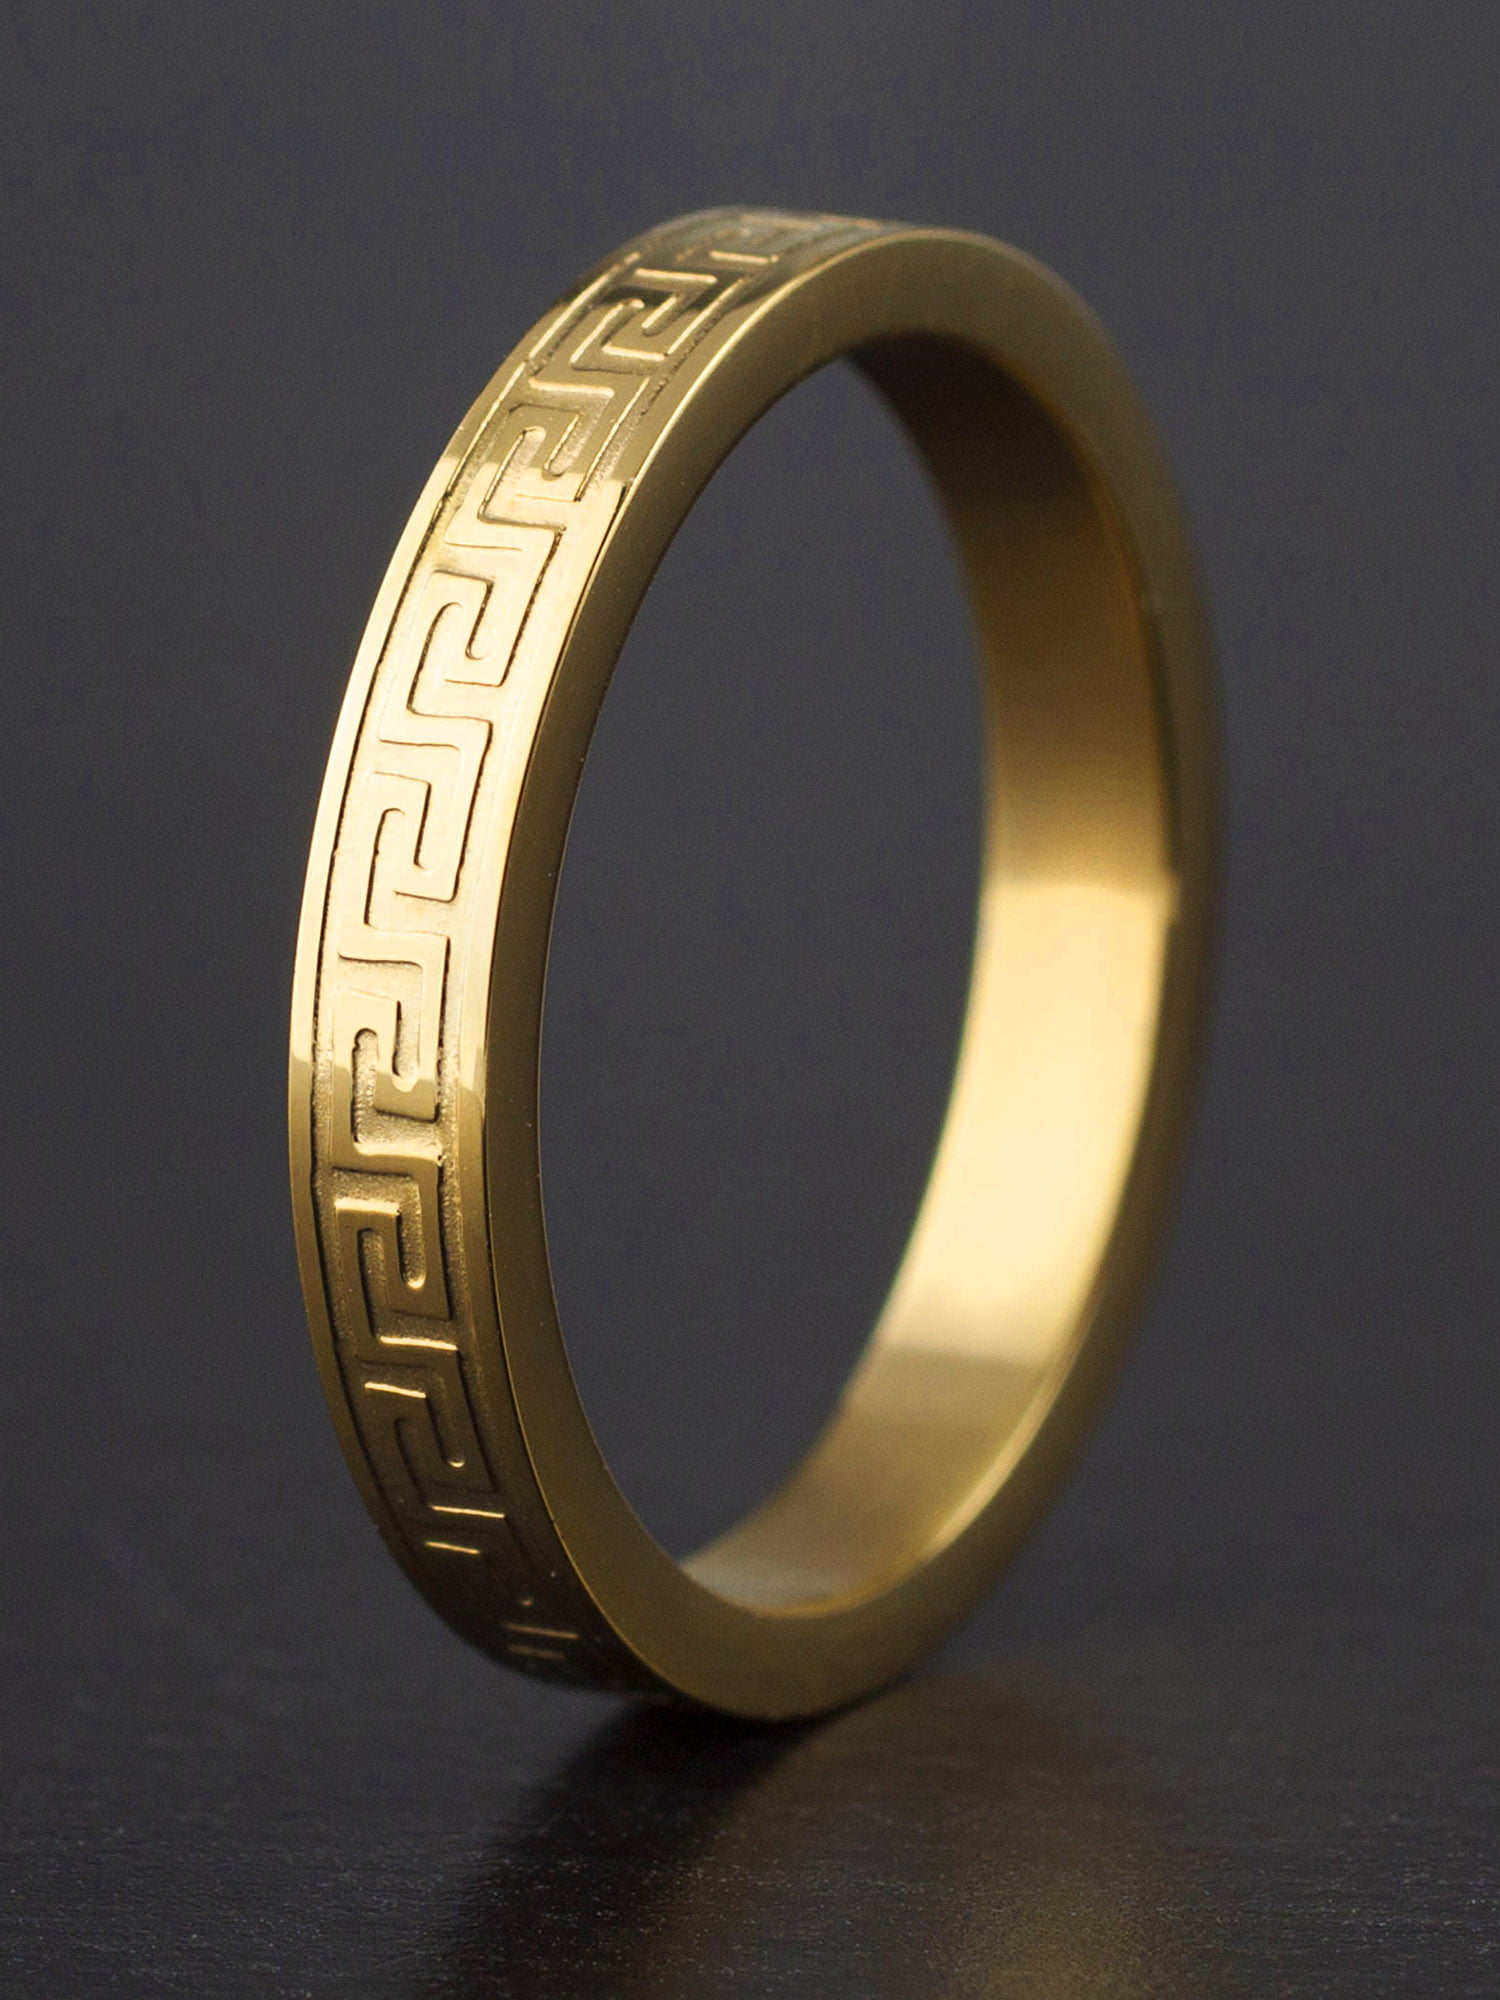 ARTK2310 Stainless Steel 14K Gold Plated Simulated Diamond Greek Key Ring  Men's Size 8-13 